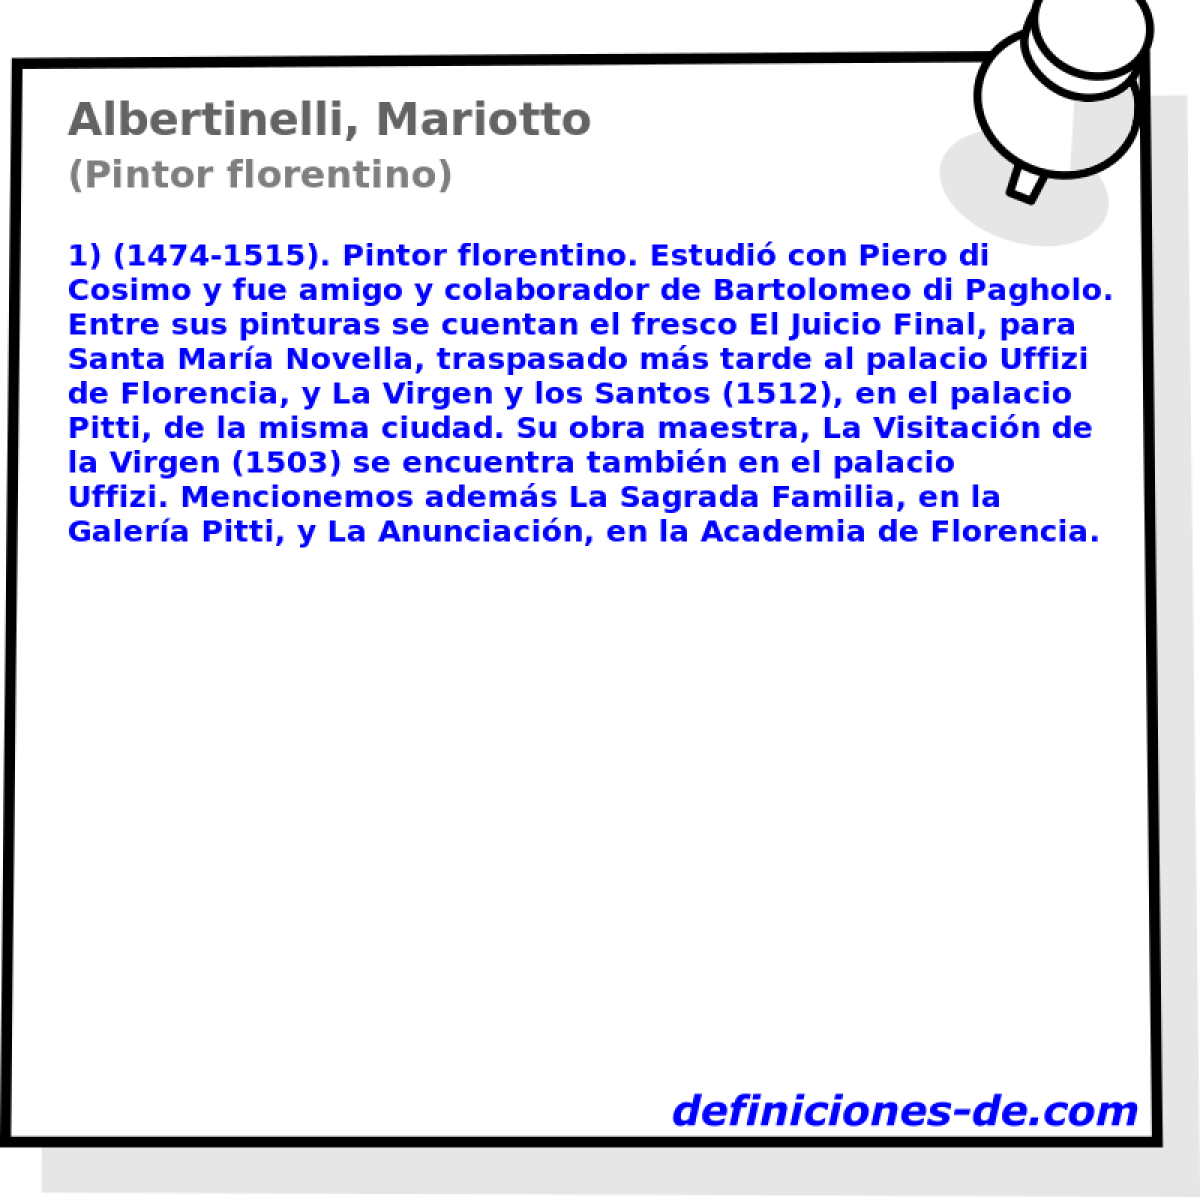 Albertinelli, Mariotto (Pintor florentino)